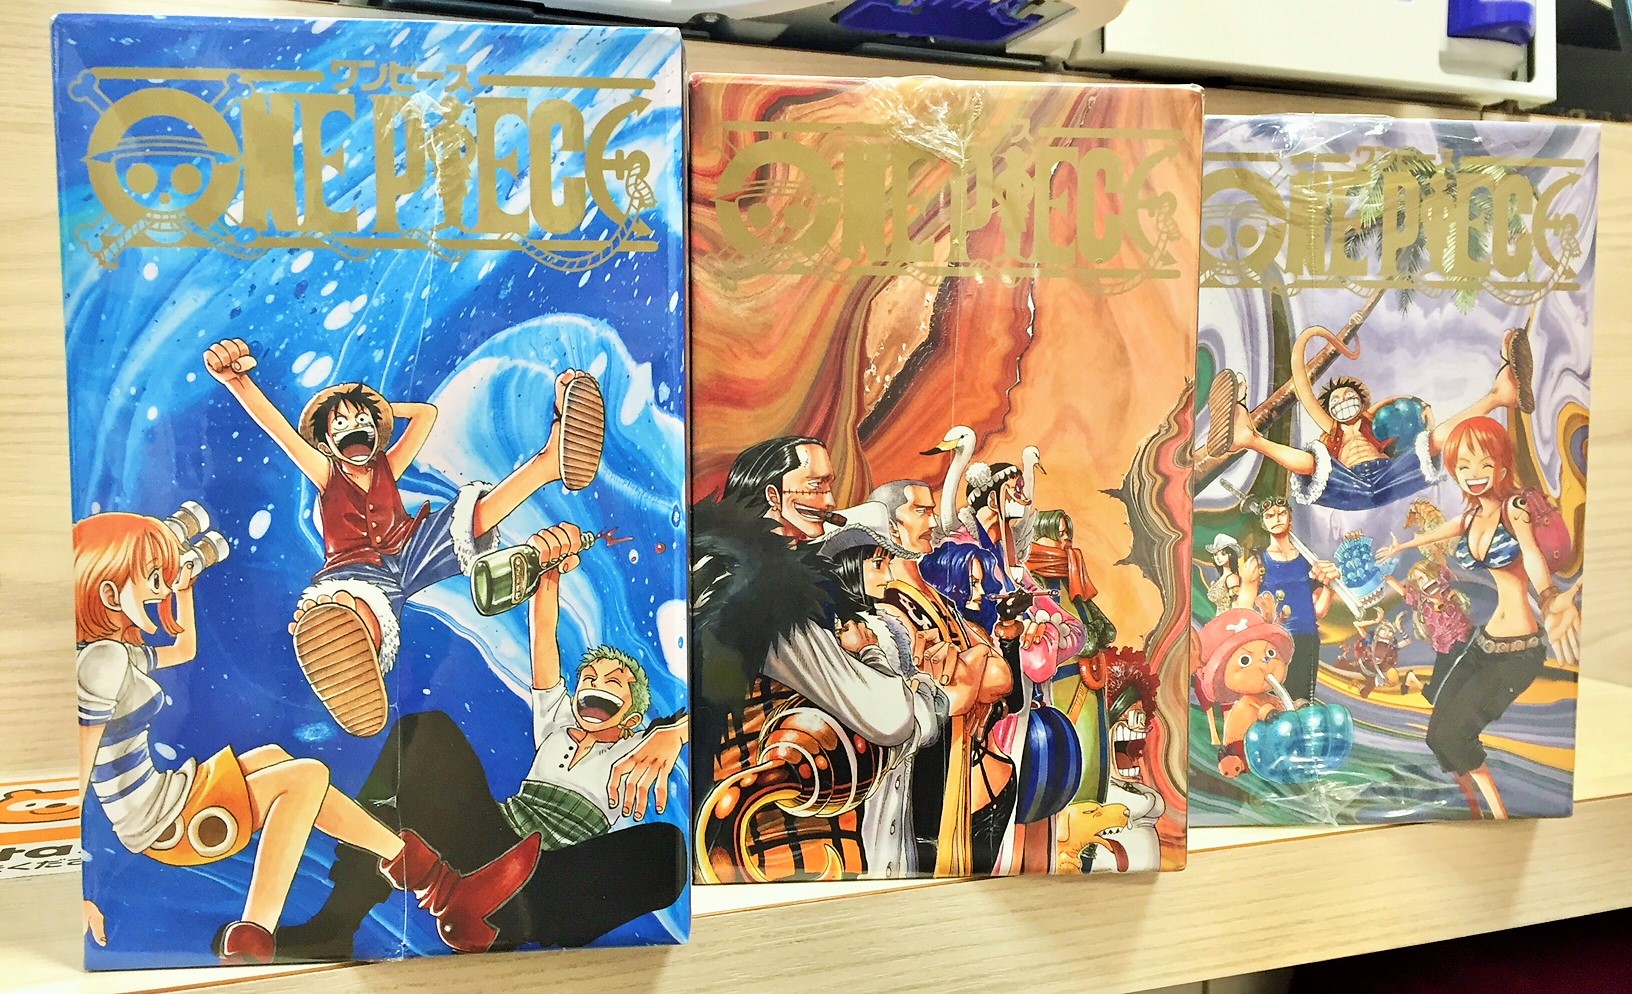 Hmv Books Spot Shinjuku 本日入荷 ジャンプコミックス One Pieceの 第一部ep1 Box 東の海 1 12巻 東の海編 第一部ep2 Box 砂の国 13 23巻 アラバスタ編 第一部ep3 Box 空の島 24 32巻 空島編 を それぞれまとめた豪華